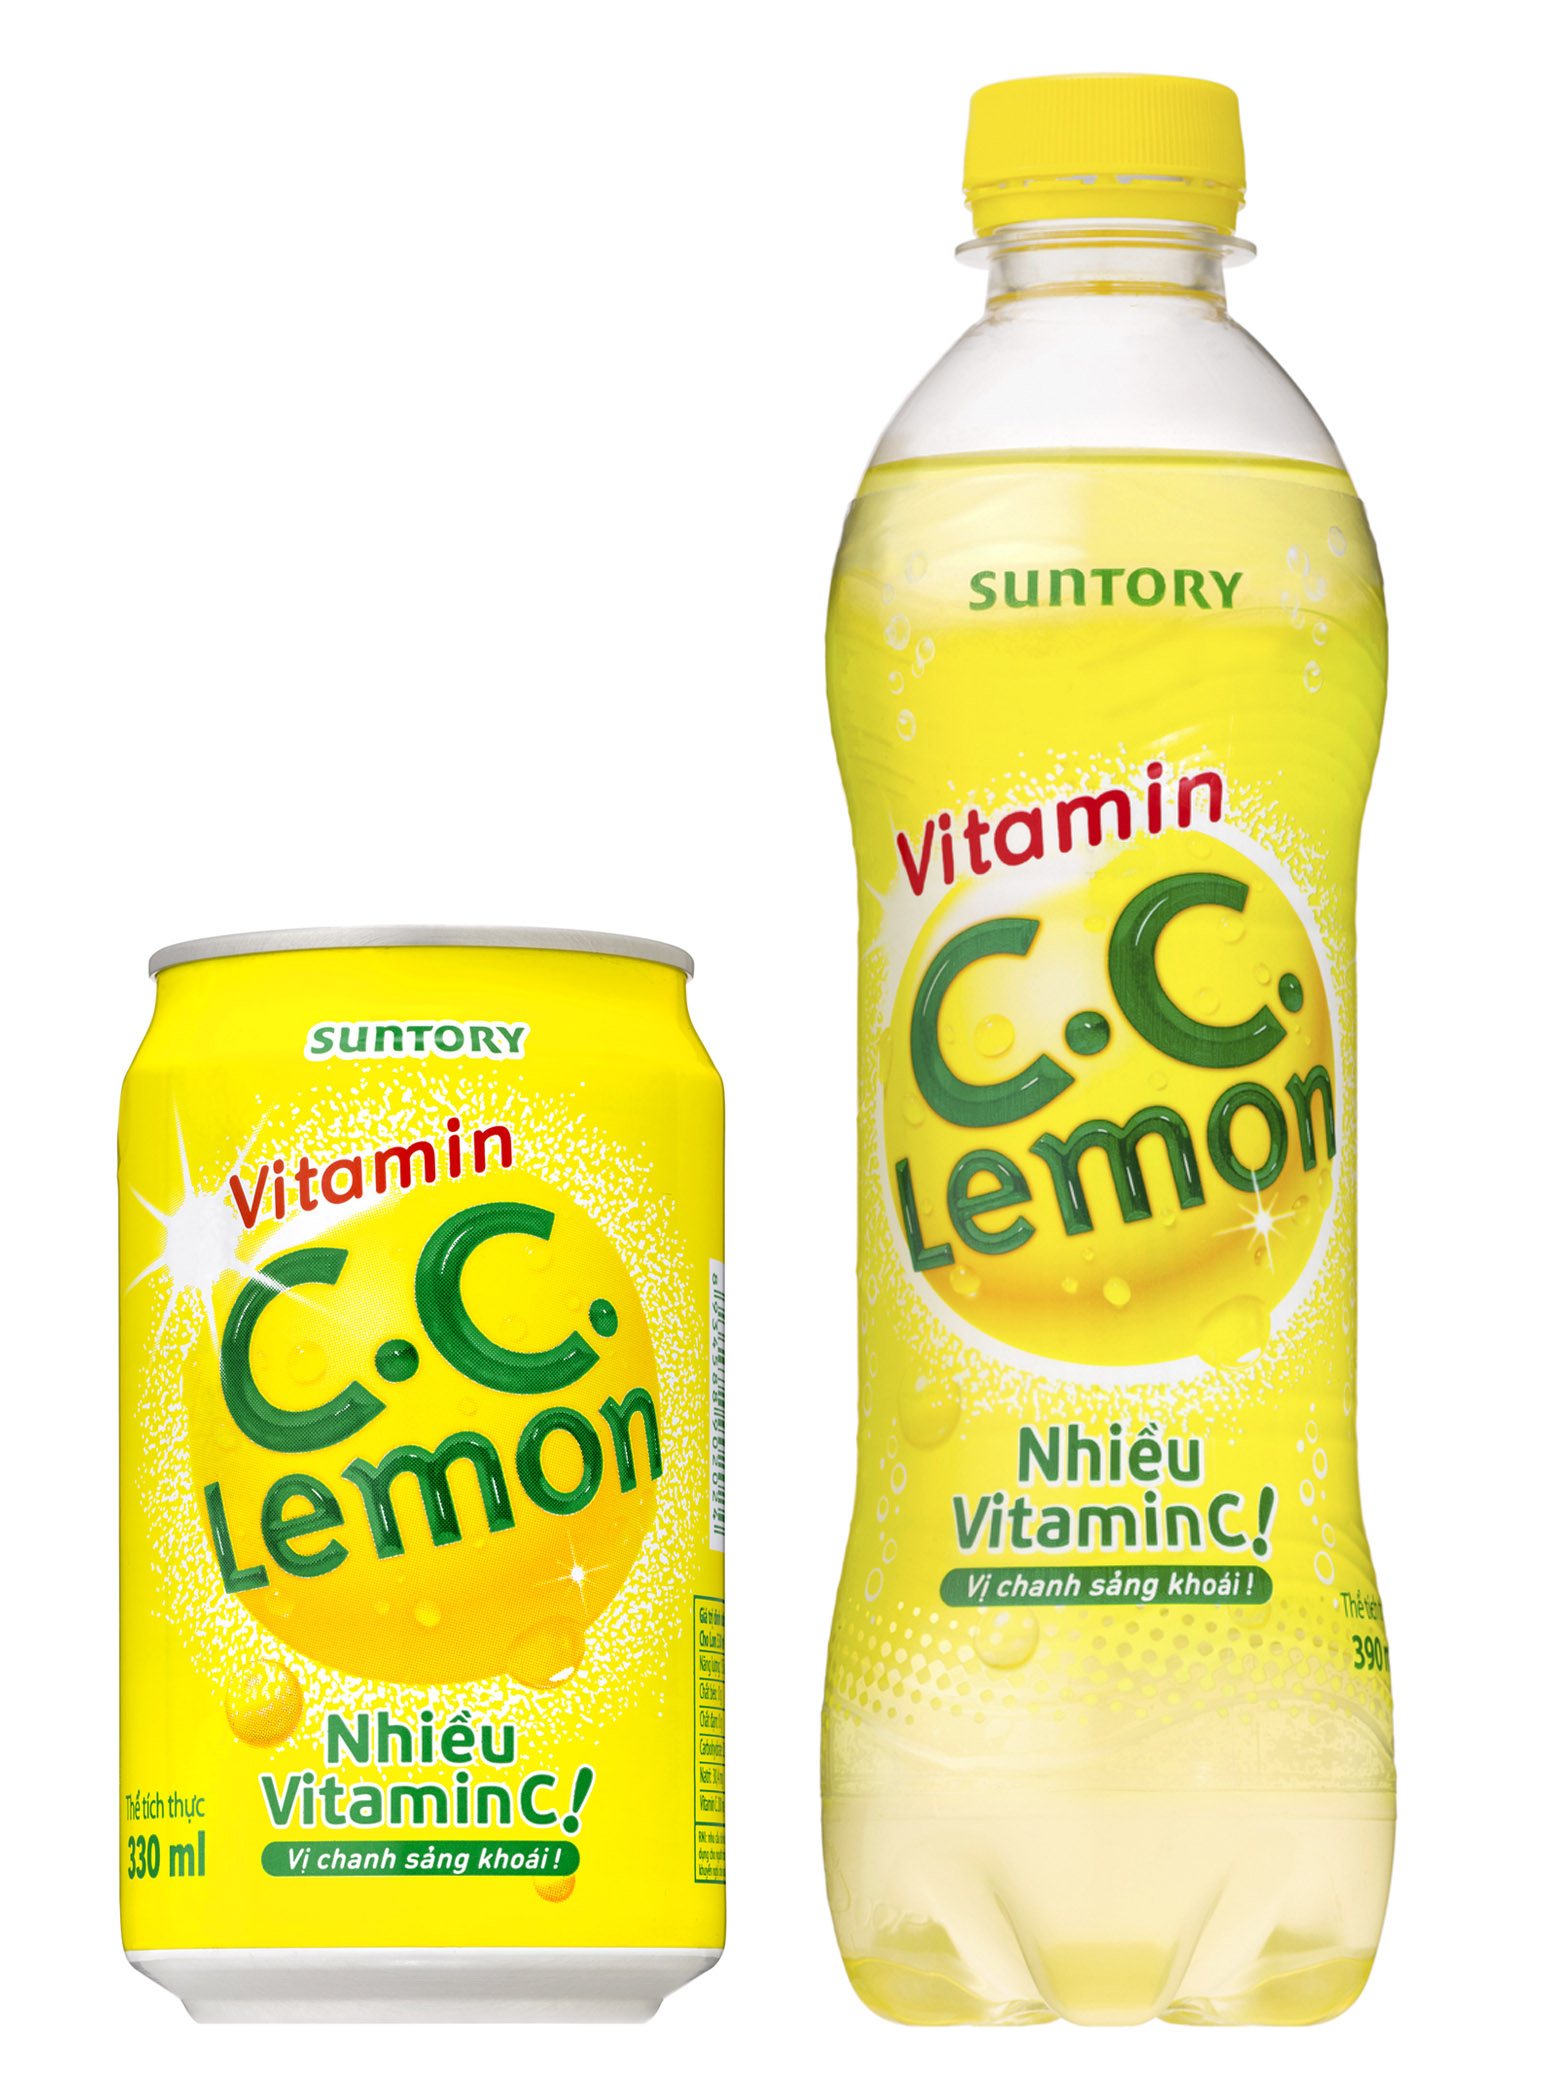 Image result for cc lemon